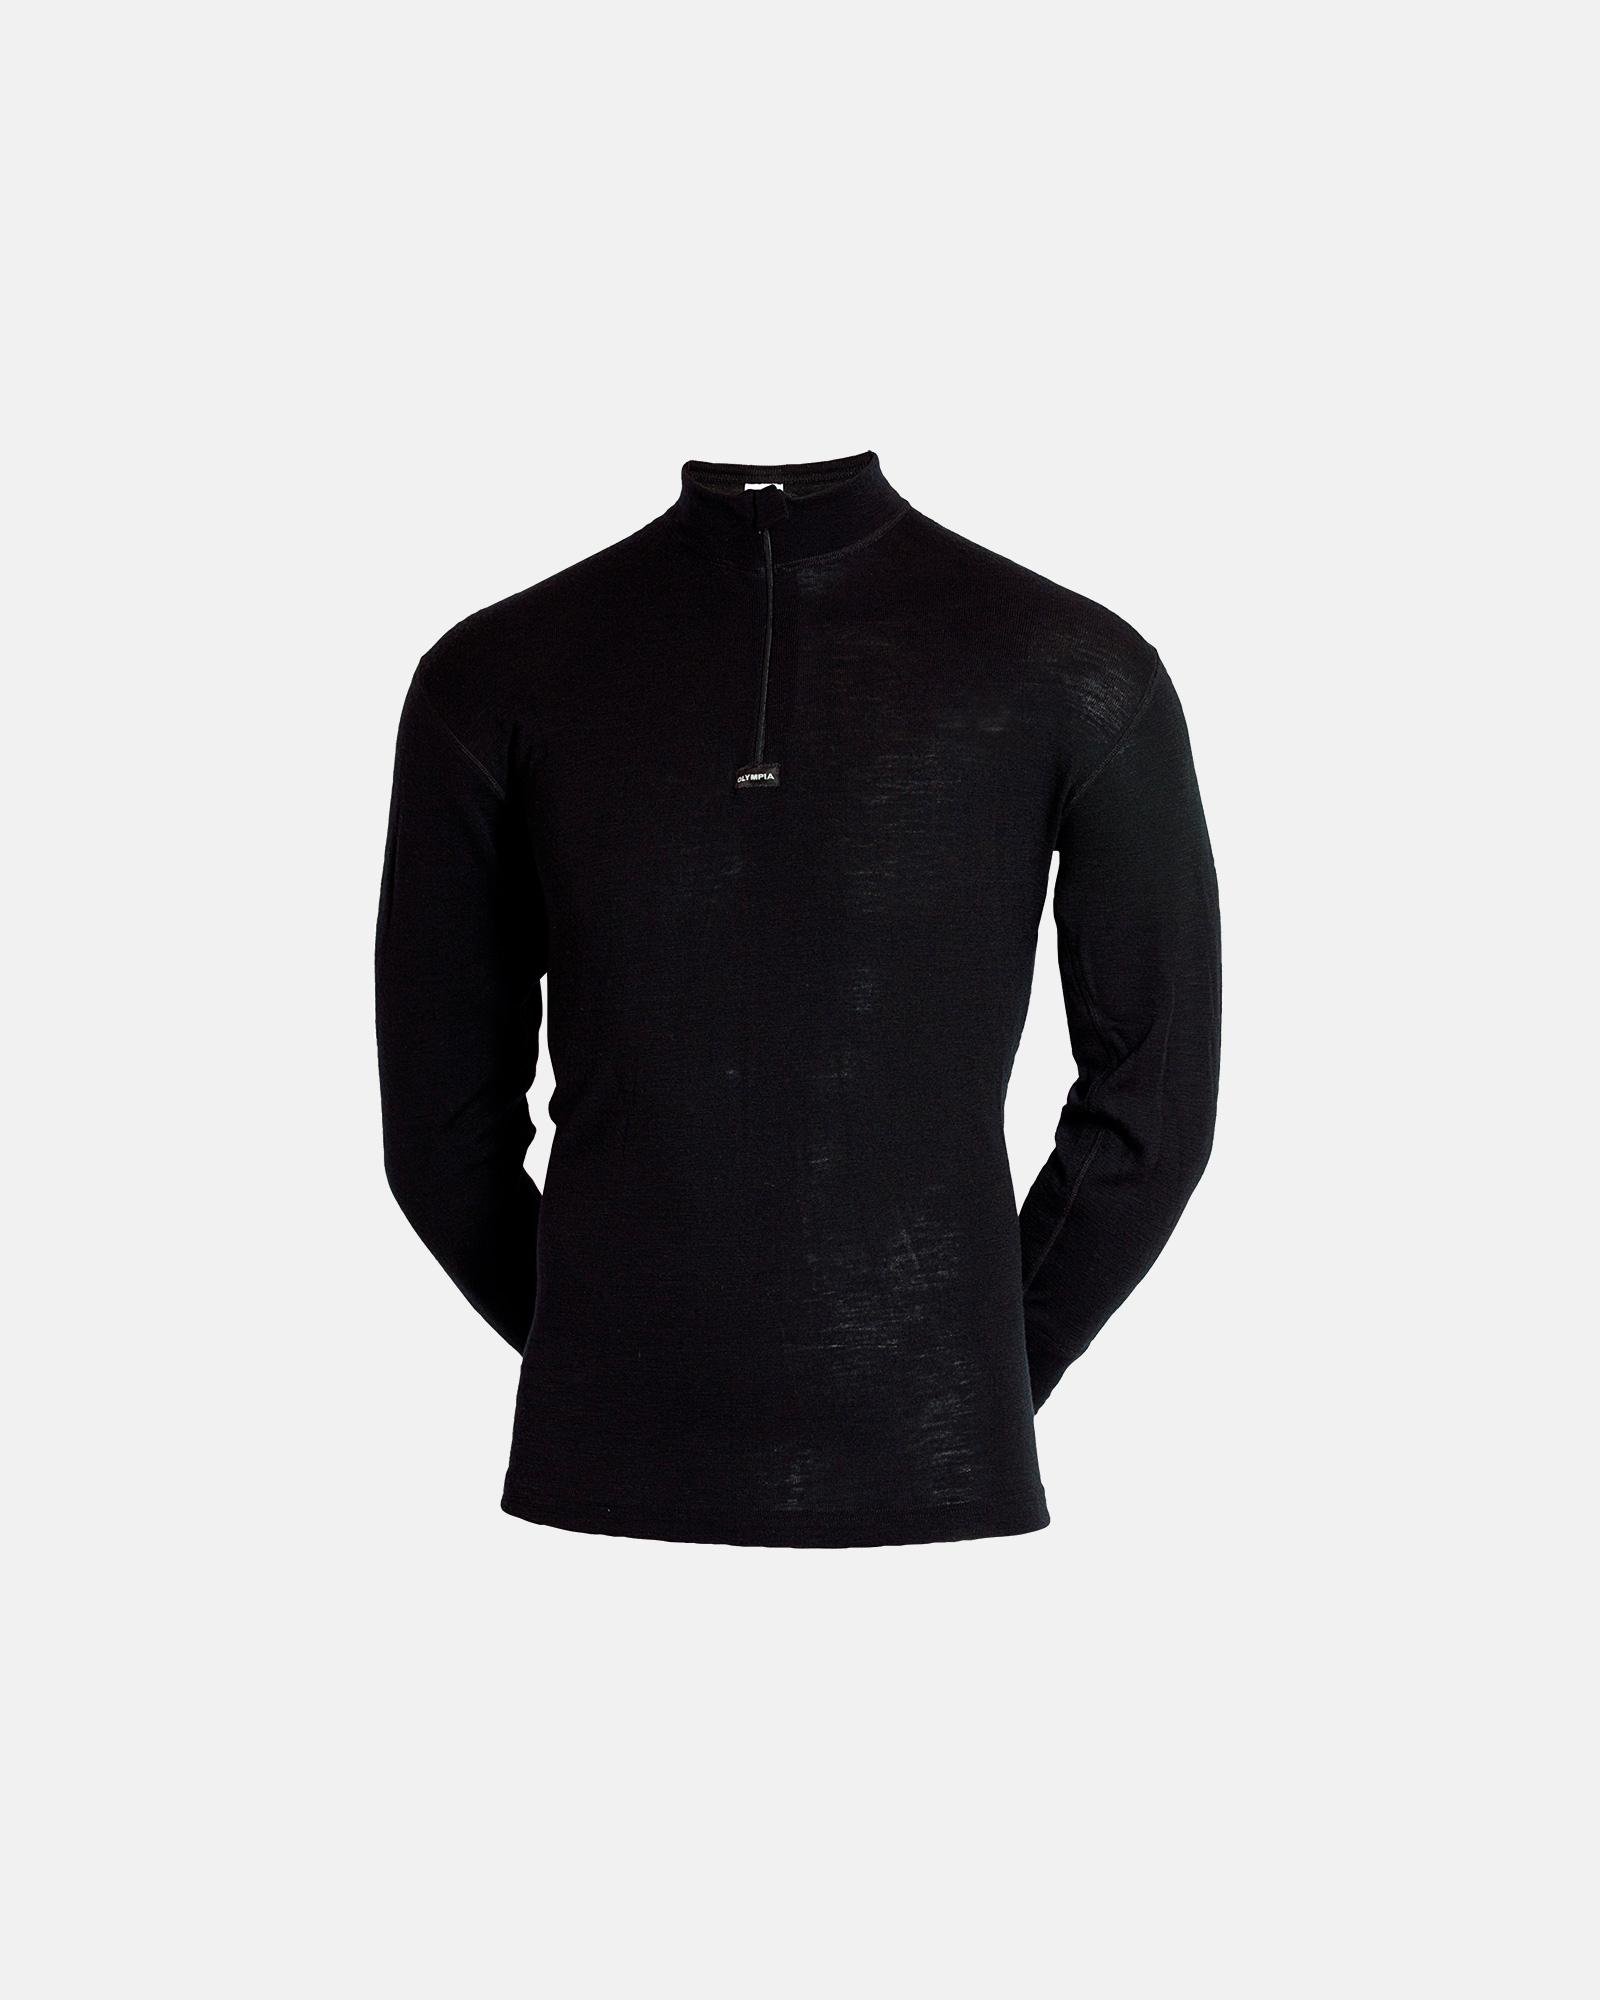 Langærmet undertrøje m. zip | 100% merino uld | sort fra - Køb Intimo